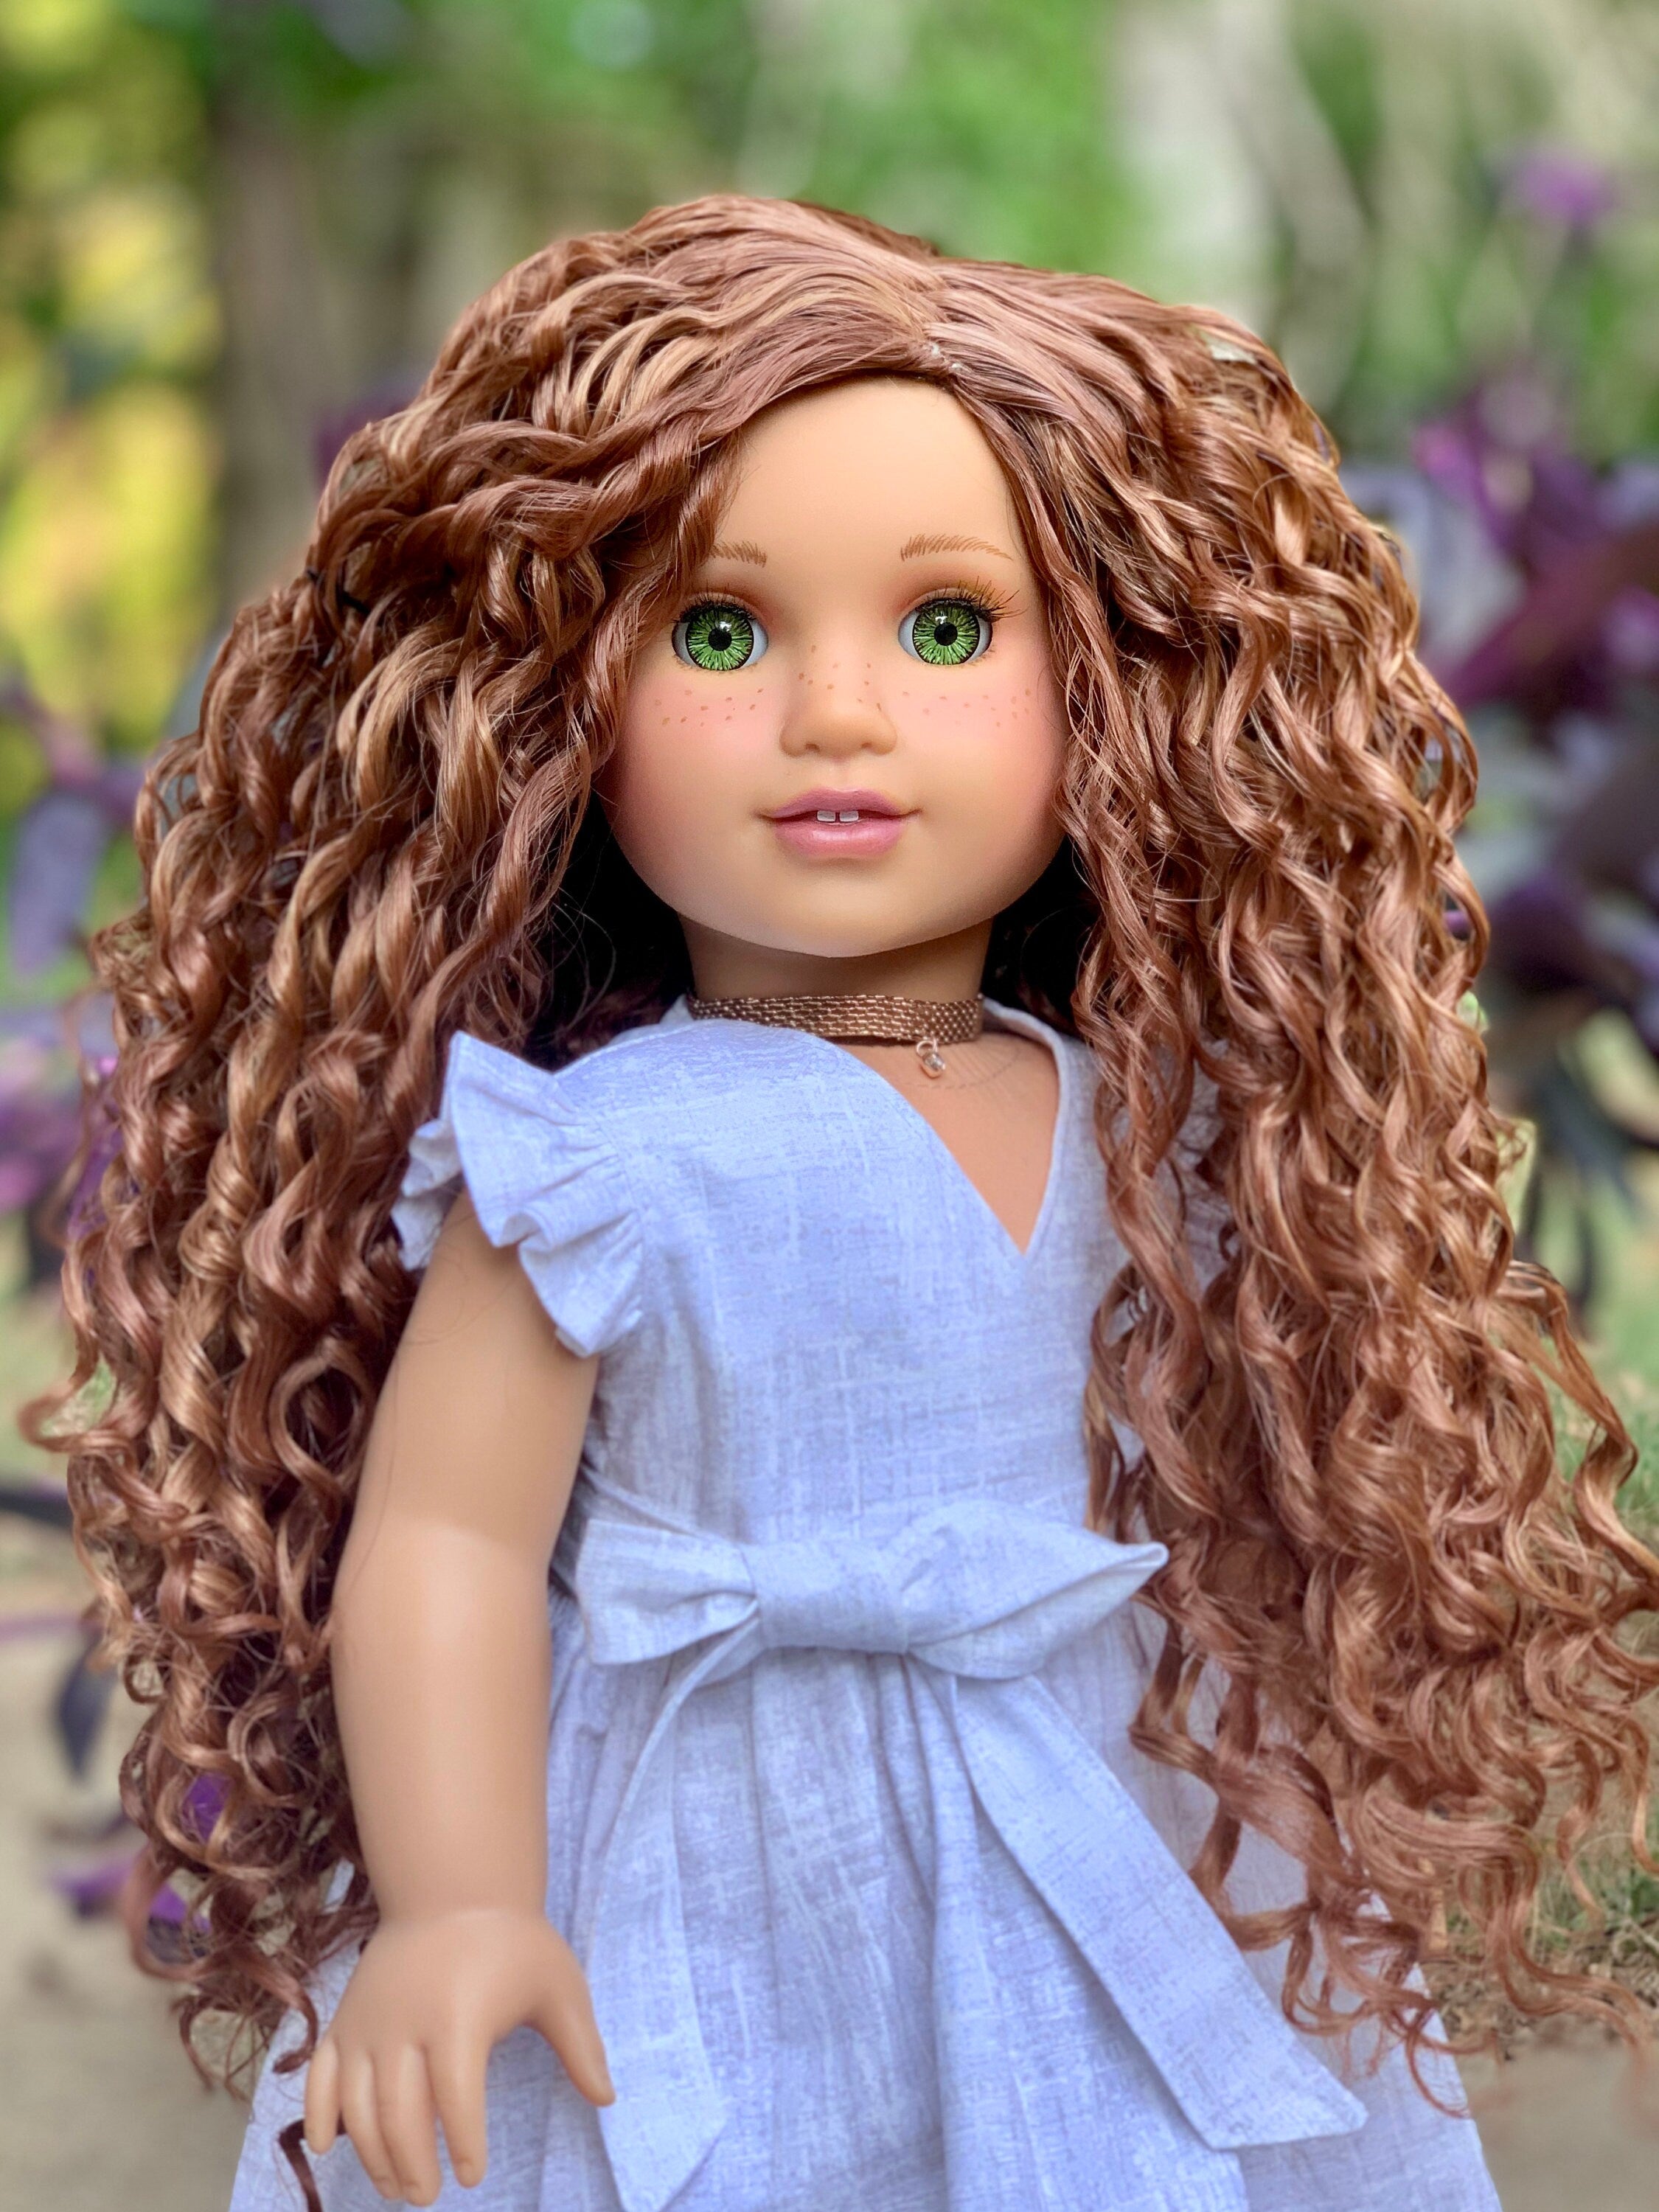 Custom doll wig for 18" American Girl Dolls - Heat Safe - Tangle Resistant - fits 10-11" head size of 18" dolls OG Blythe BJD Gotz  Honey